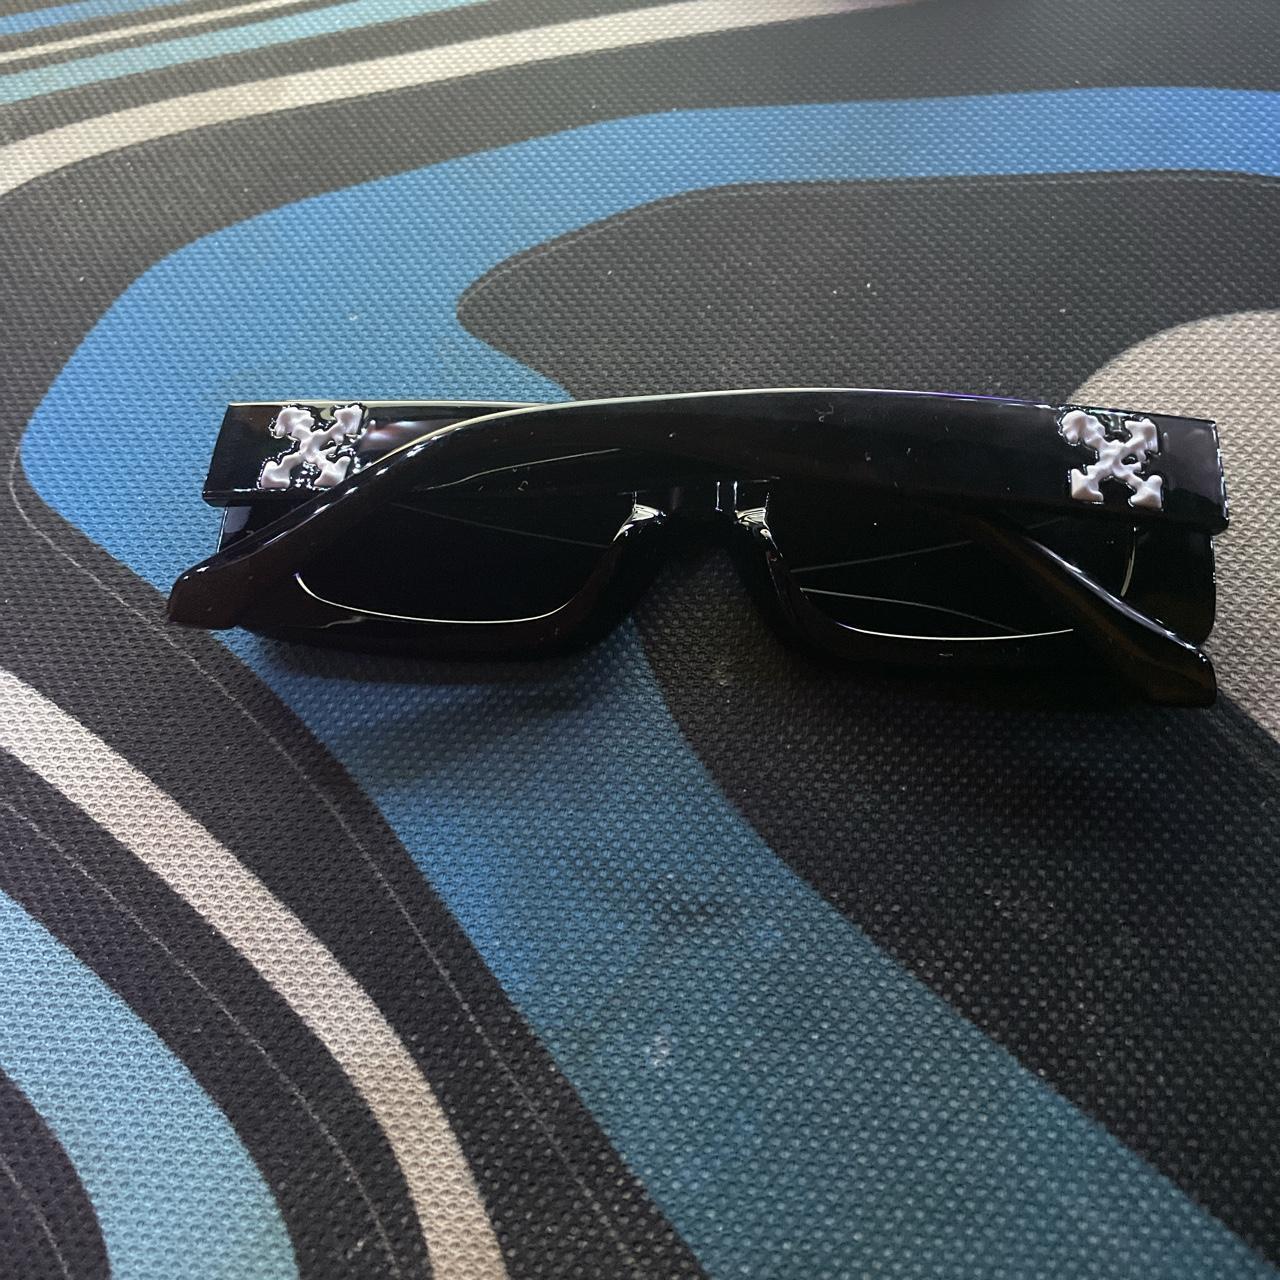 Men's Black and White Sunglasses OFF WHITE - Depop